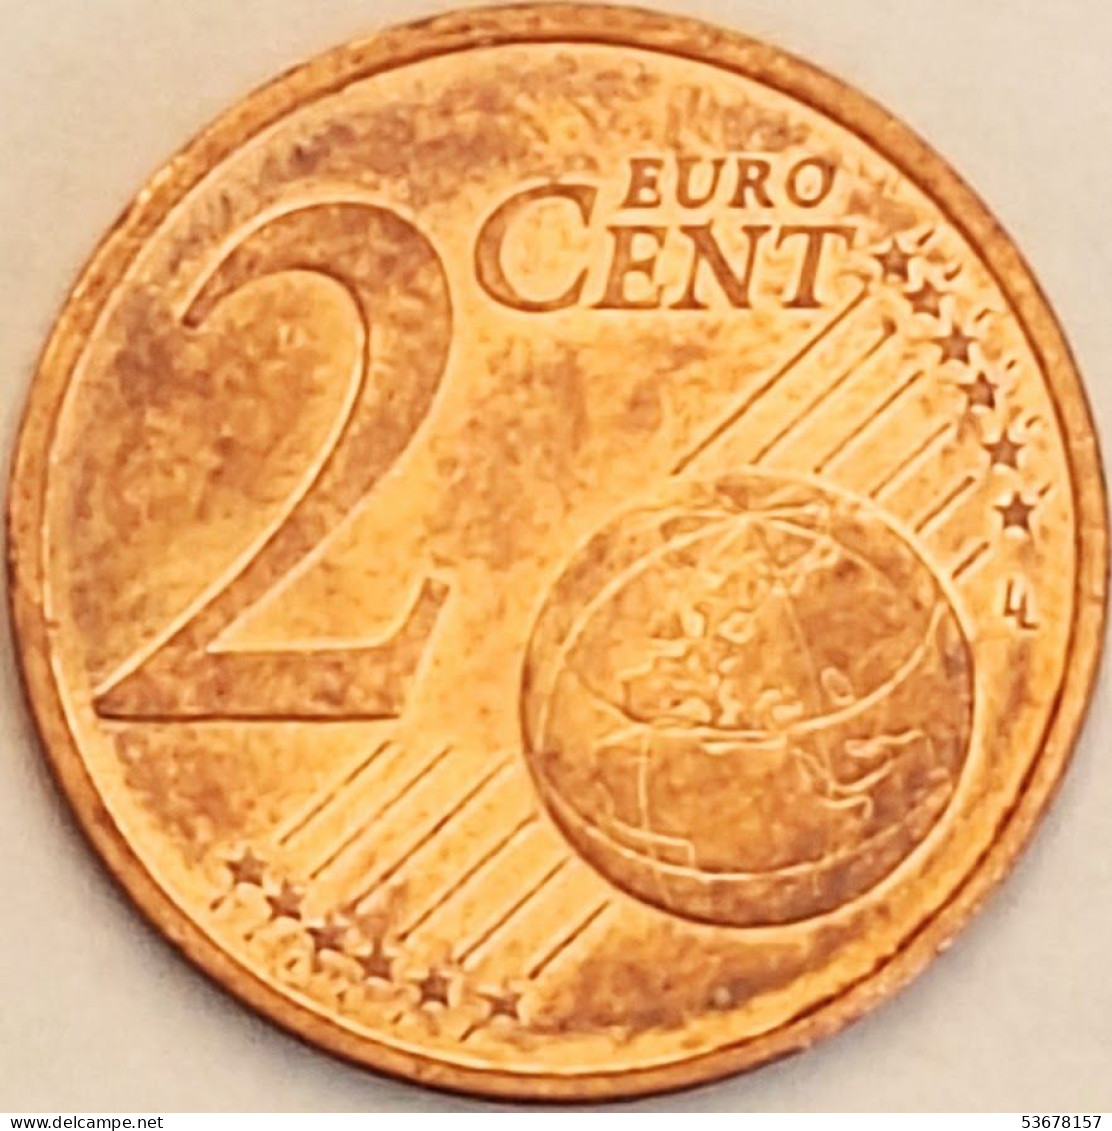 France - 2 Euro Cent 2000, KM# 1283 (#4372) - France